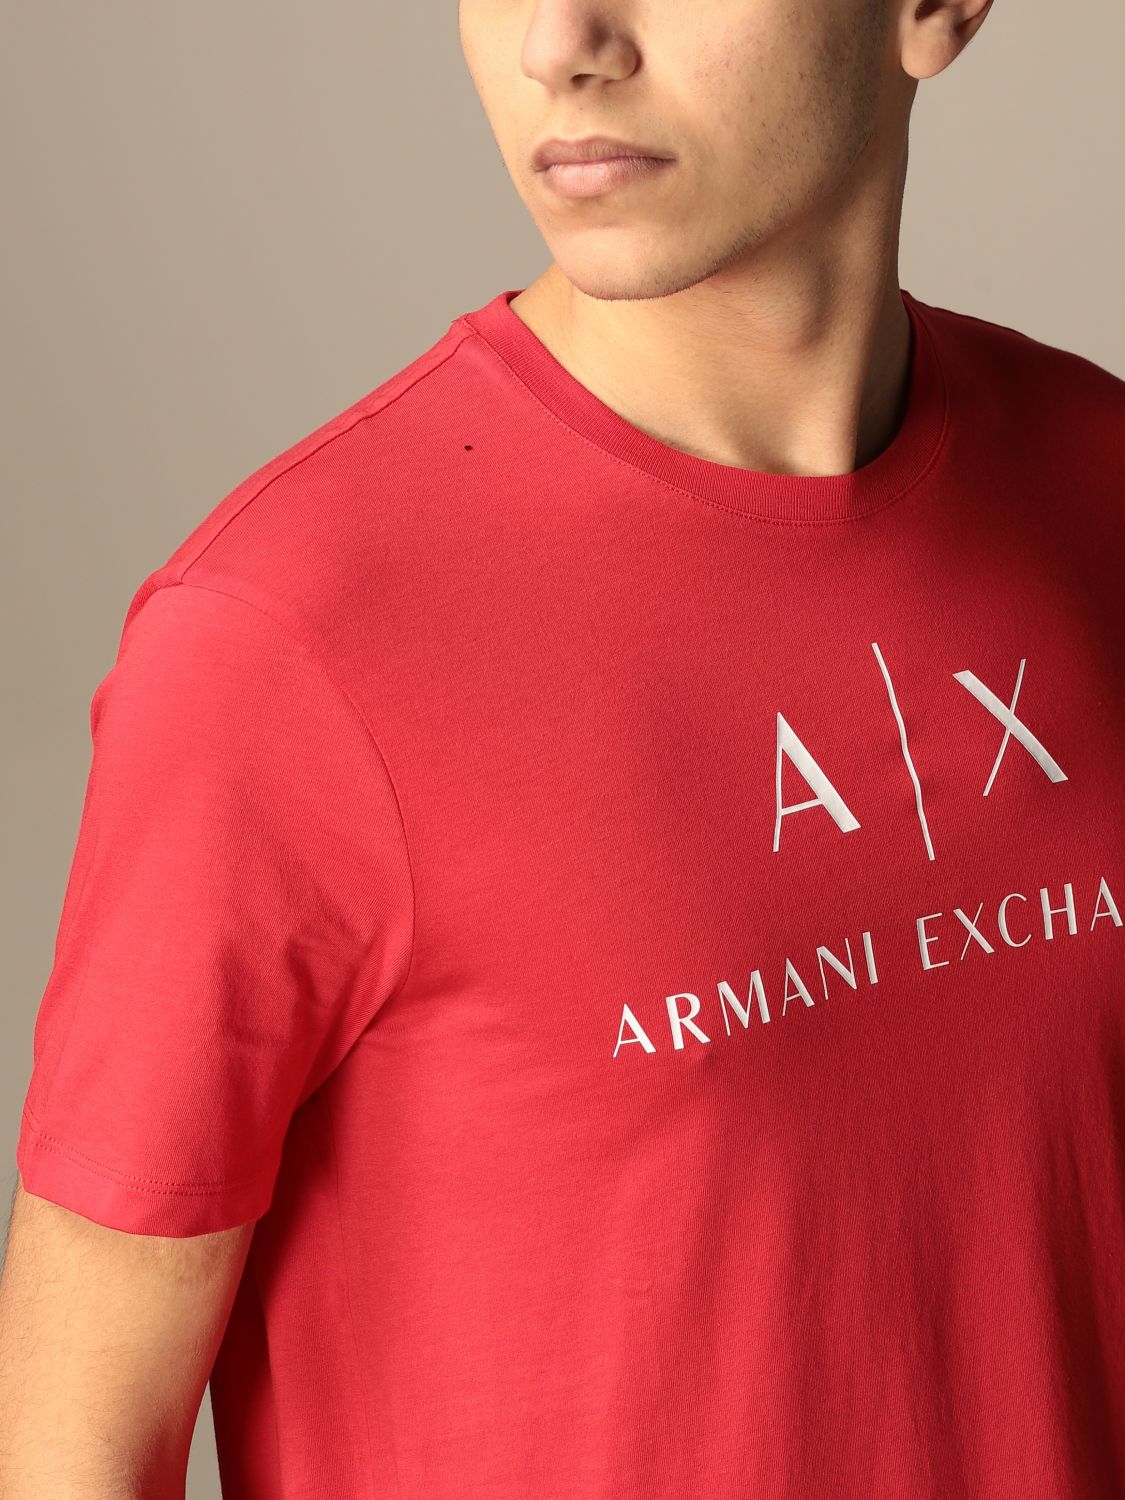 ARMANI EXCHANGE: T-shirt with AX logo - Red | T-Shirt Armani Exchange ...